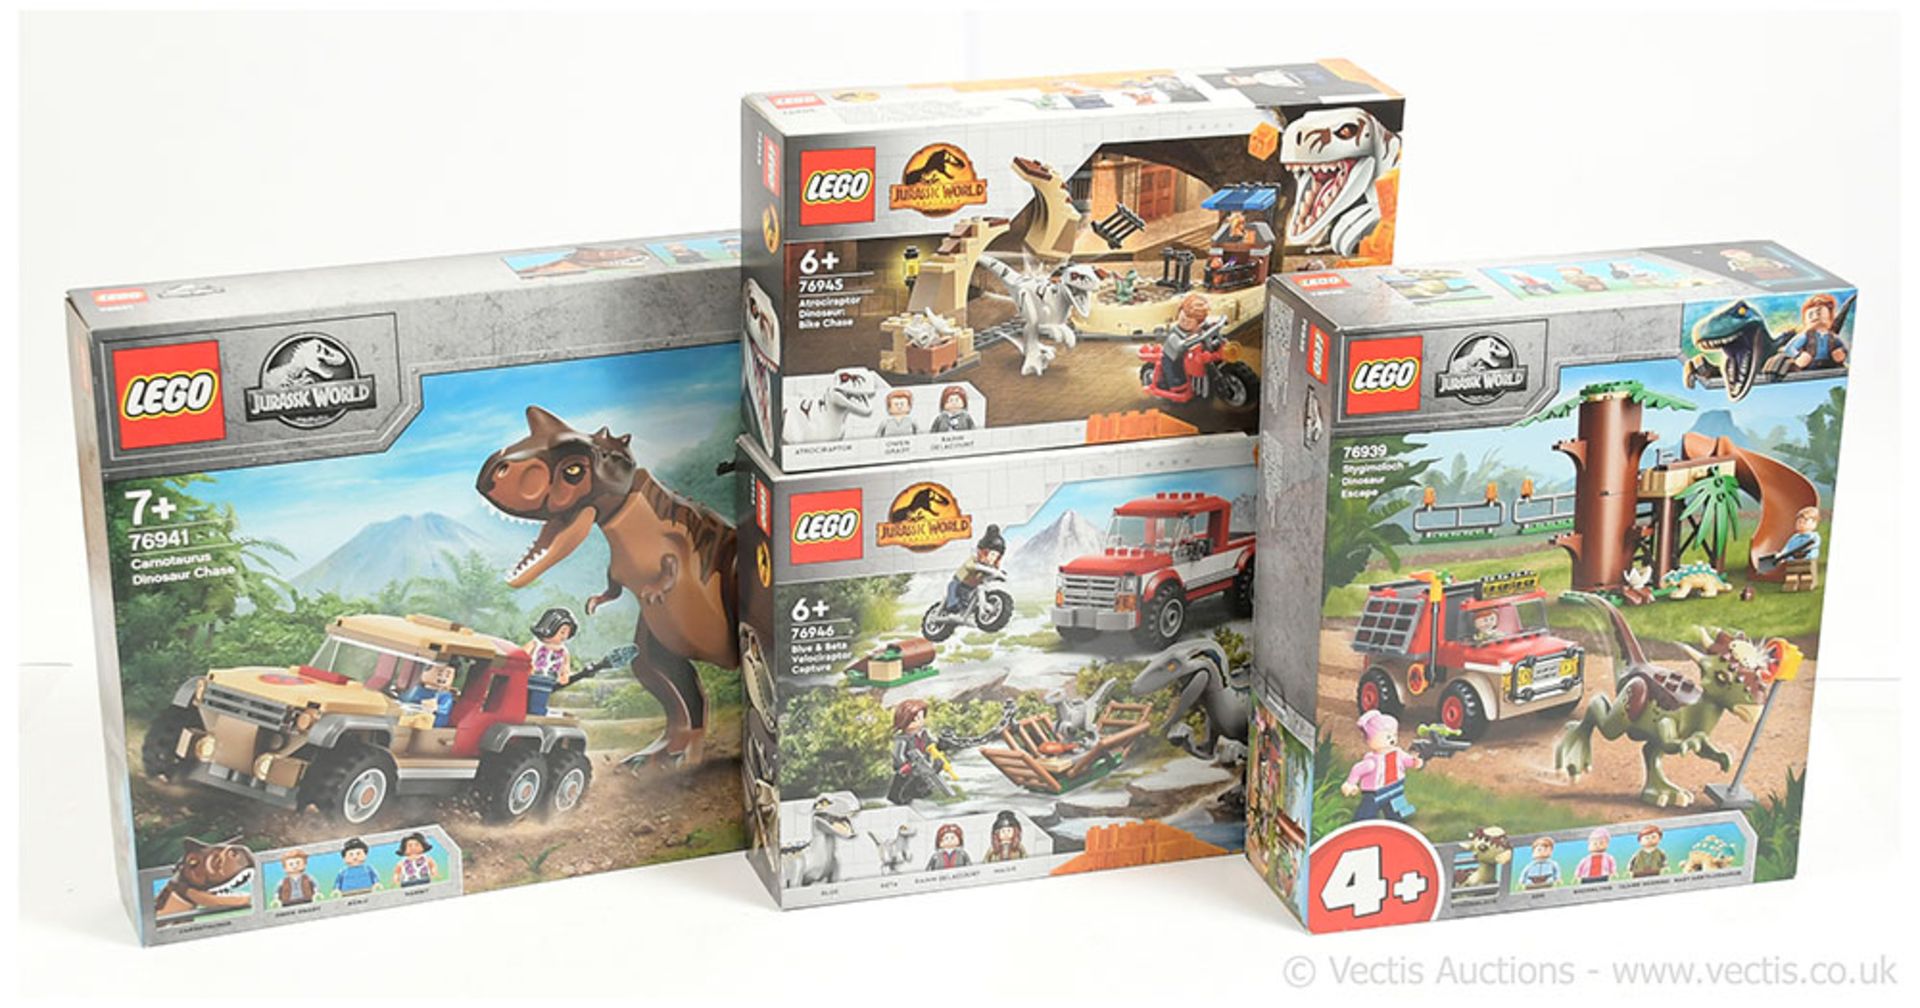 GRP inc Lego Jurassic World boxed (1) 76941